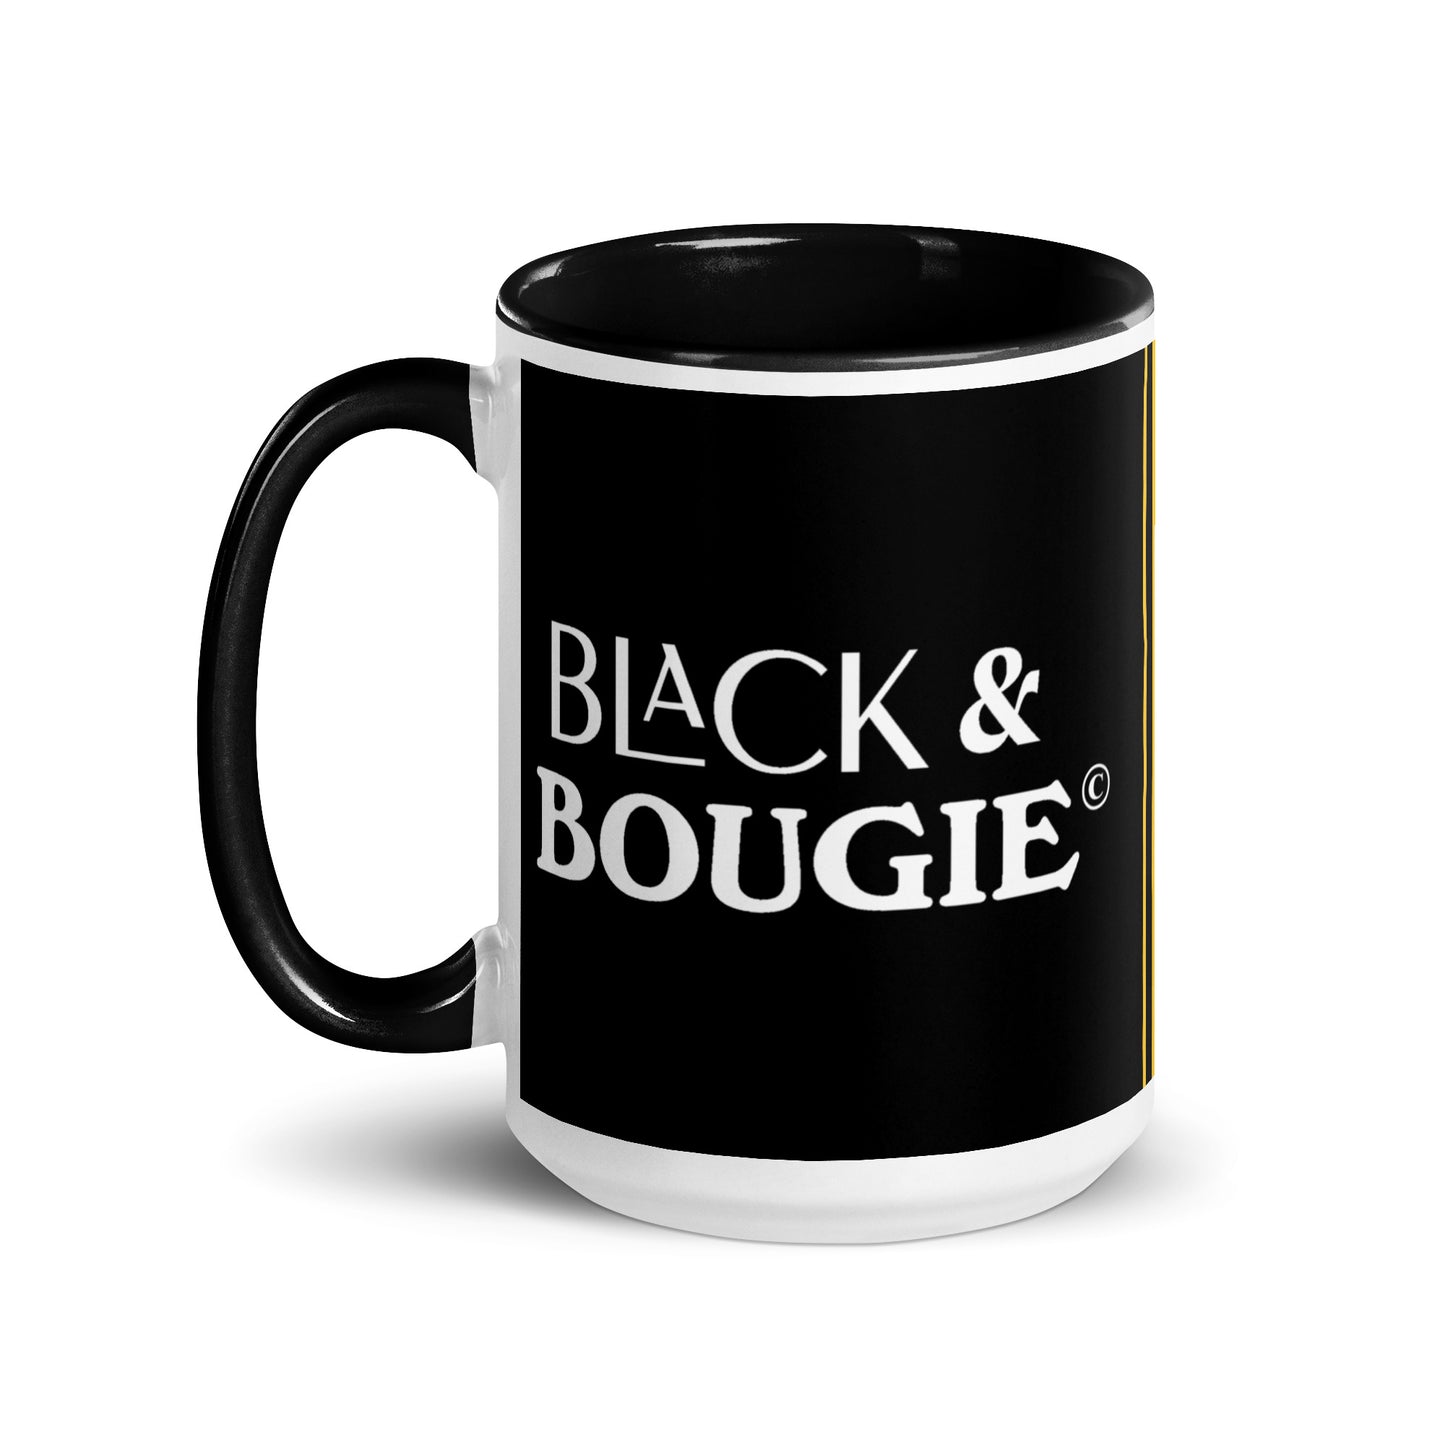 Black & Bougie Gold Striped Mug